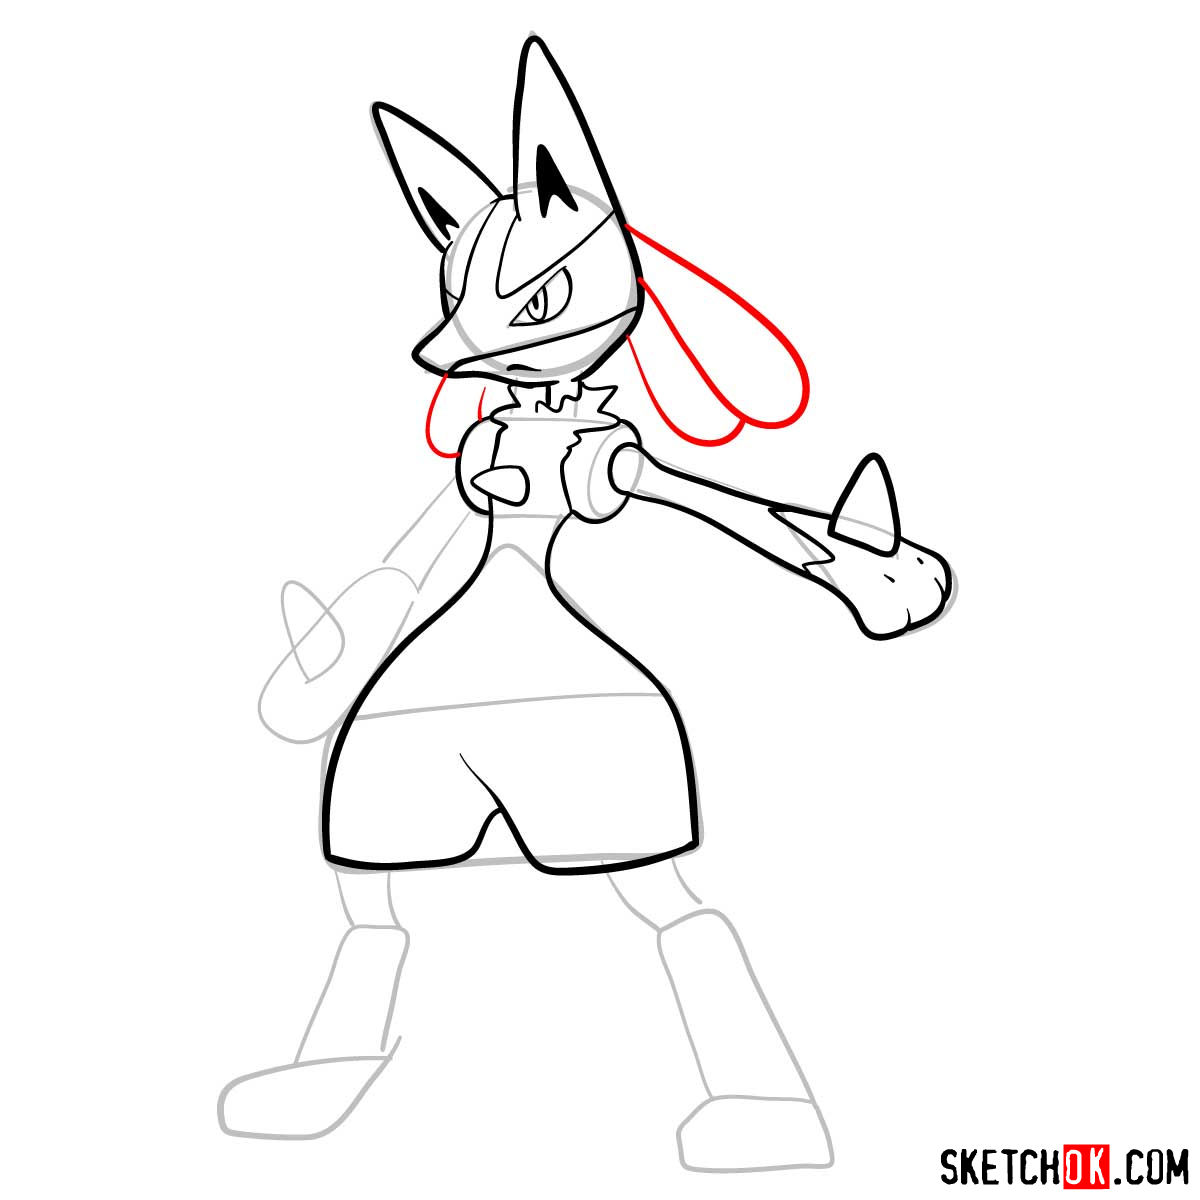 How to draw Lucario pokemon - step 09